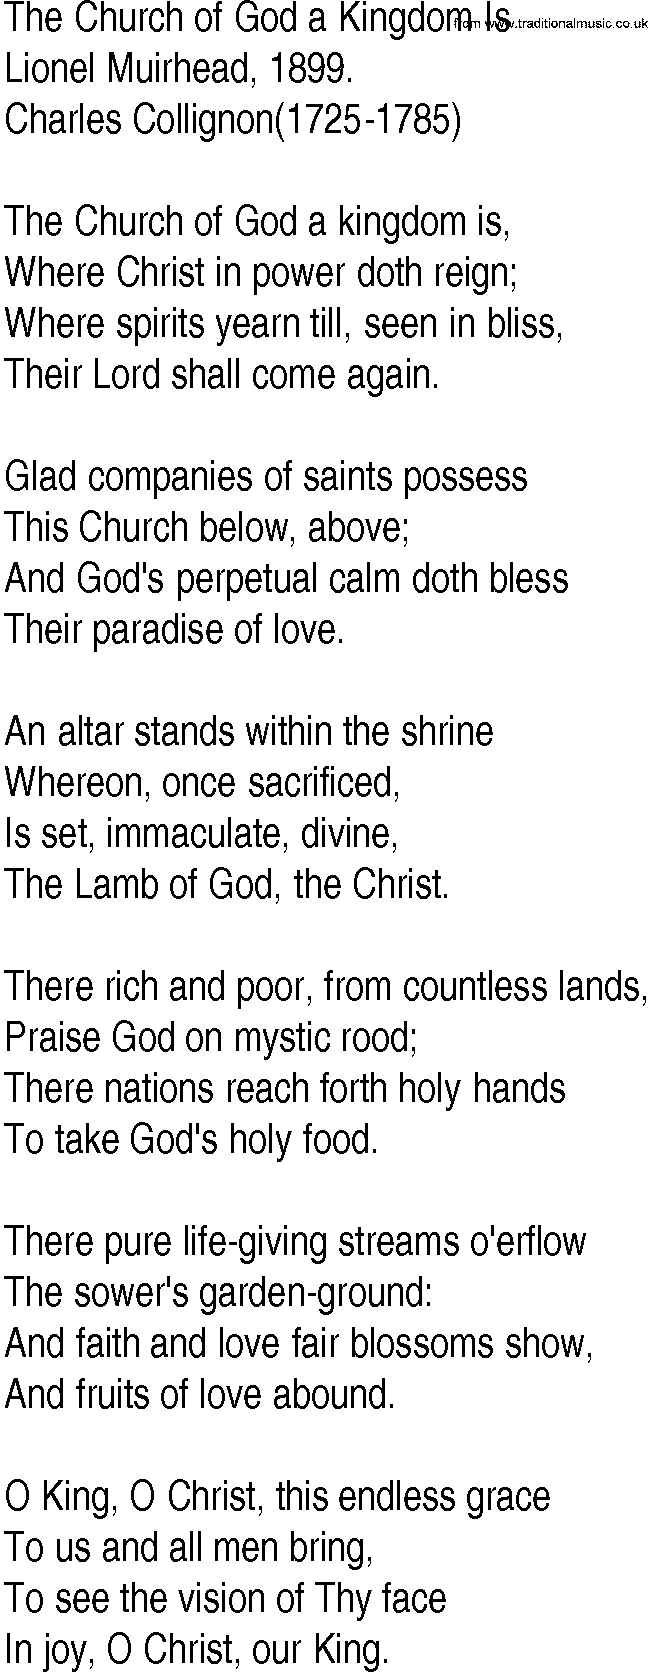 Hymn and Gospel Song: The Church of God a Kingdom Is by Lionel Muirhead lyrics